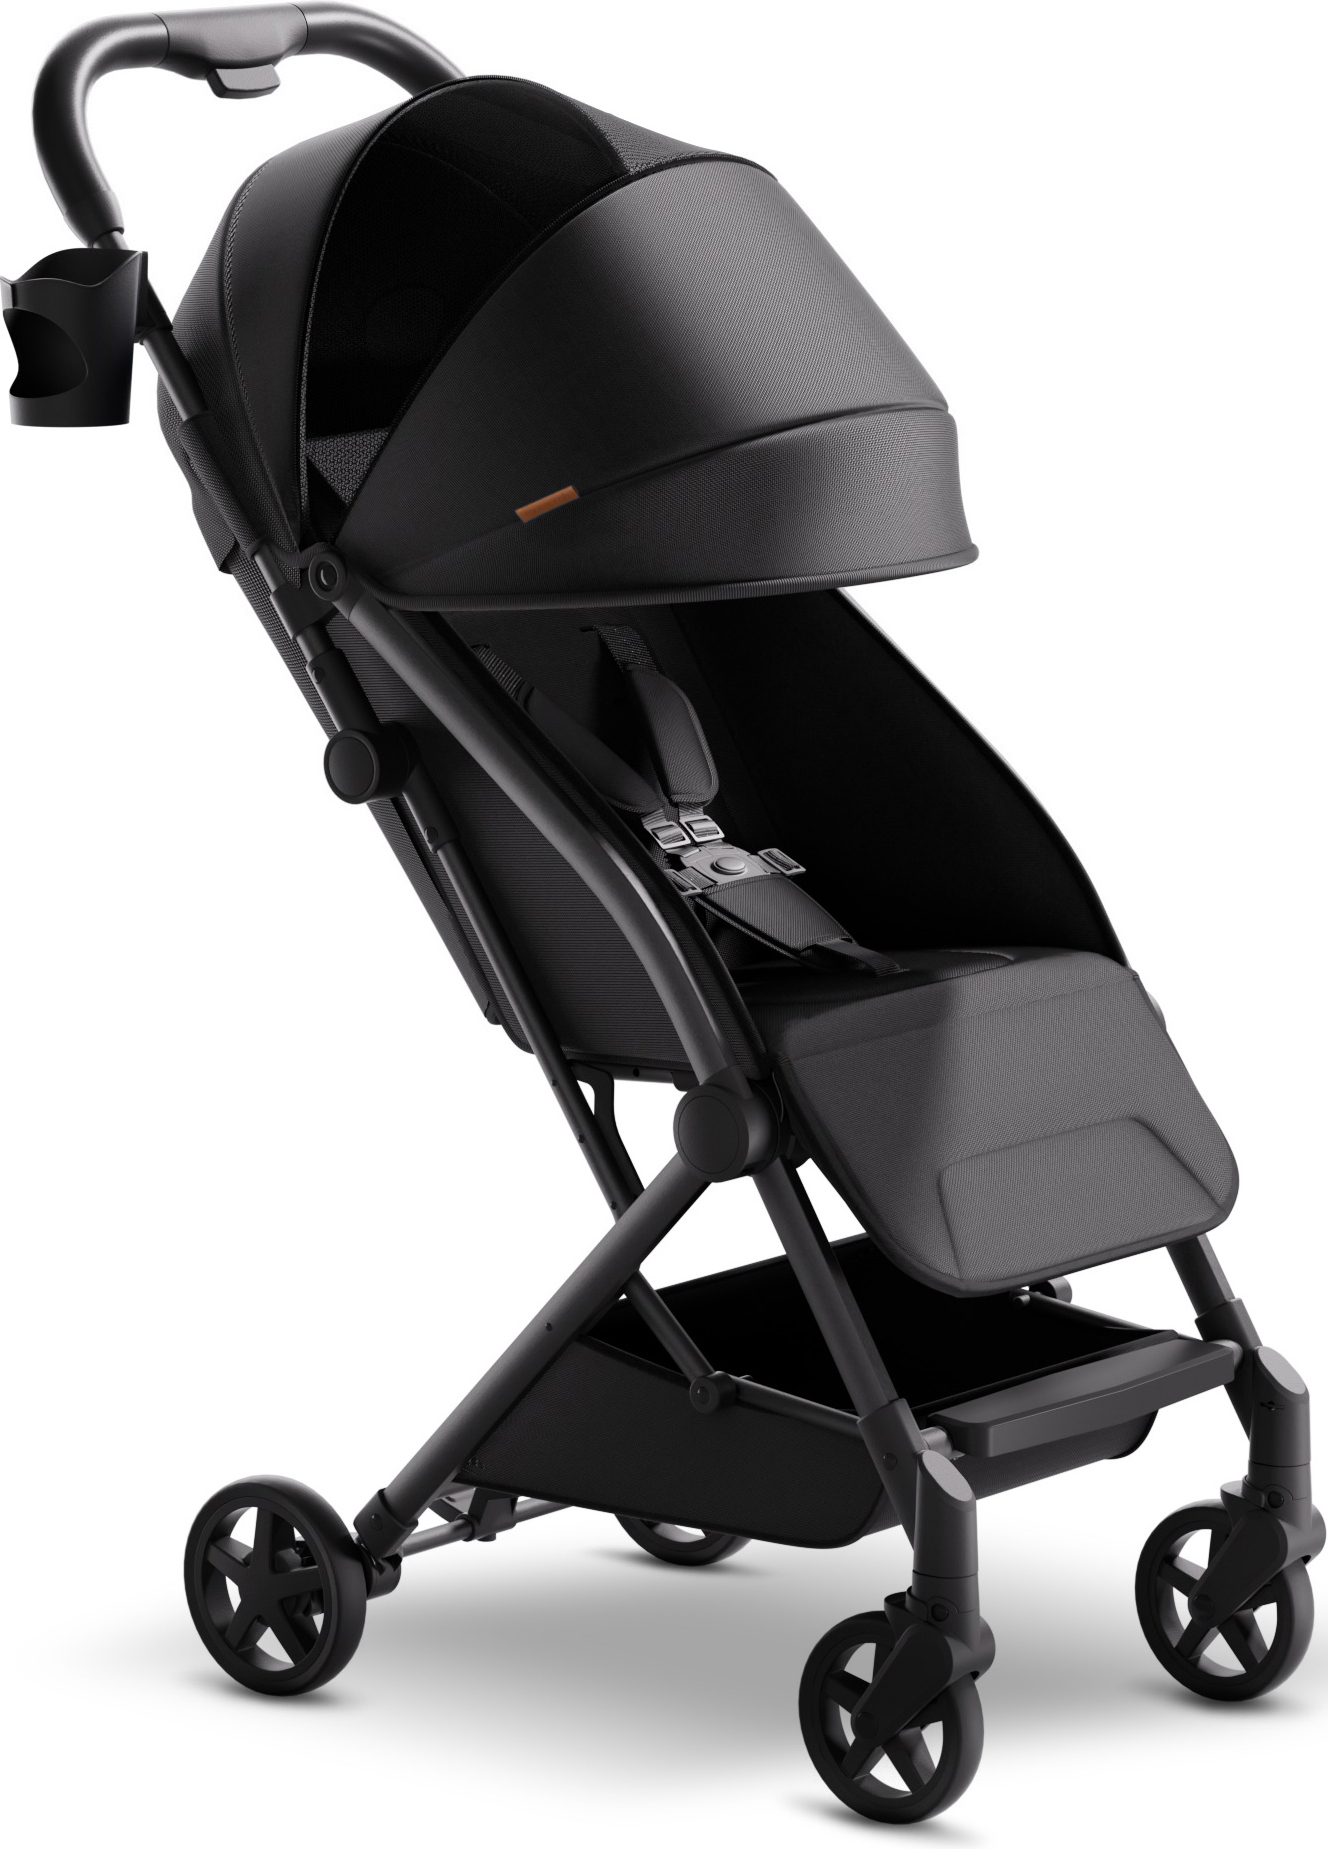 Mompush Lightweight Baby Stroller, Compact Stroller for Airplane Travel, Black, 14.2 lb, Unisex - image 1 of 11